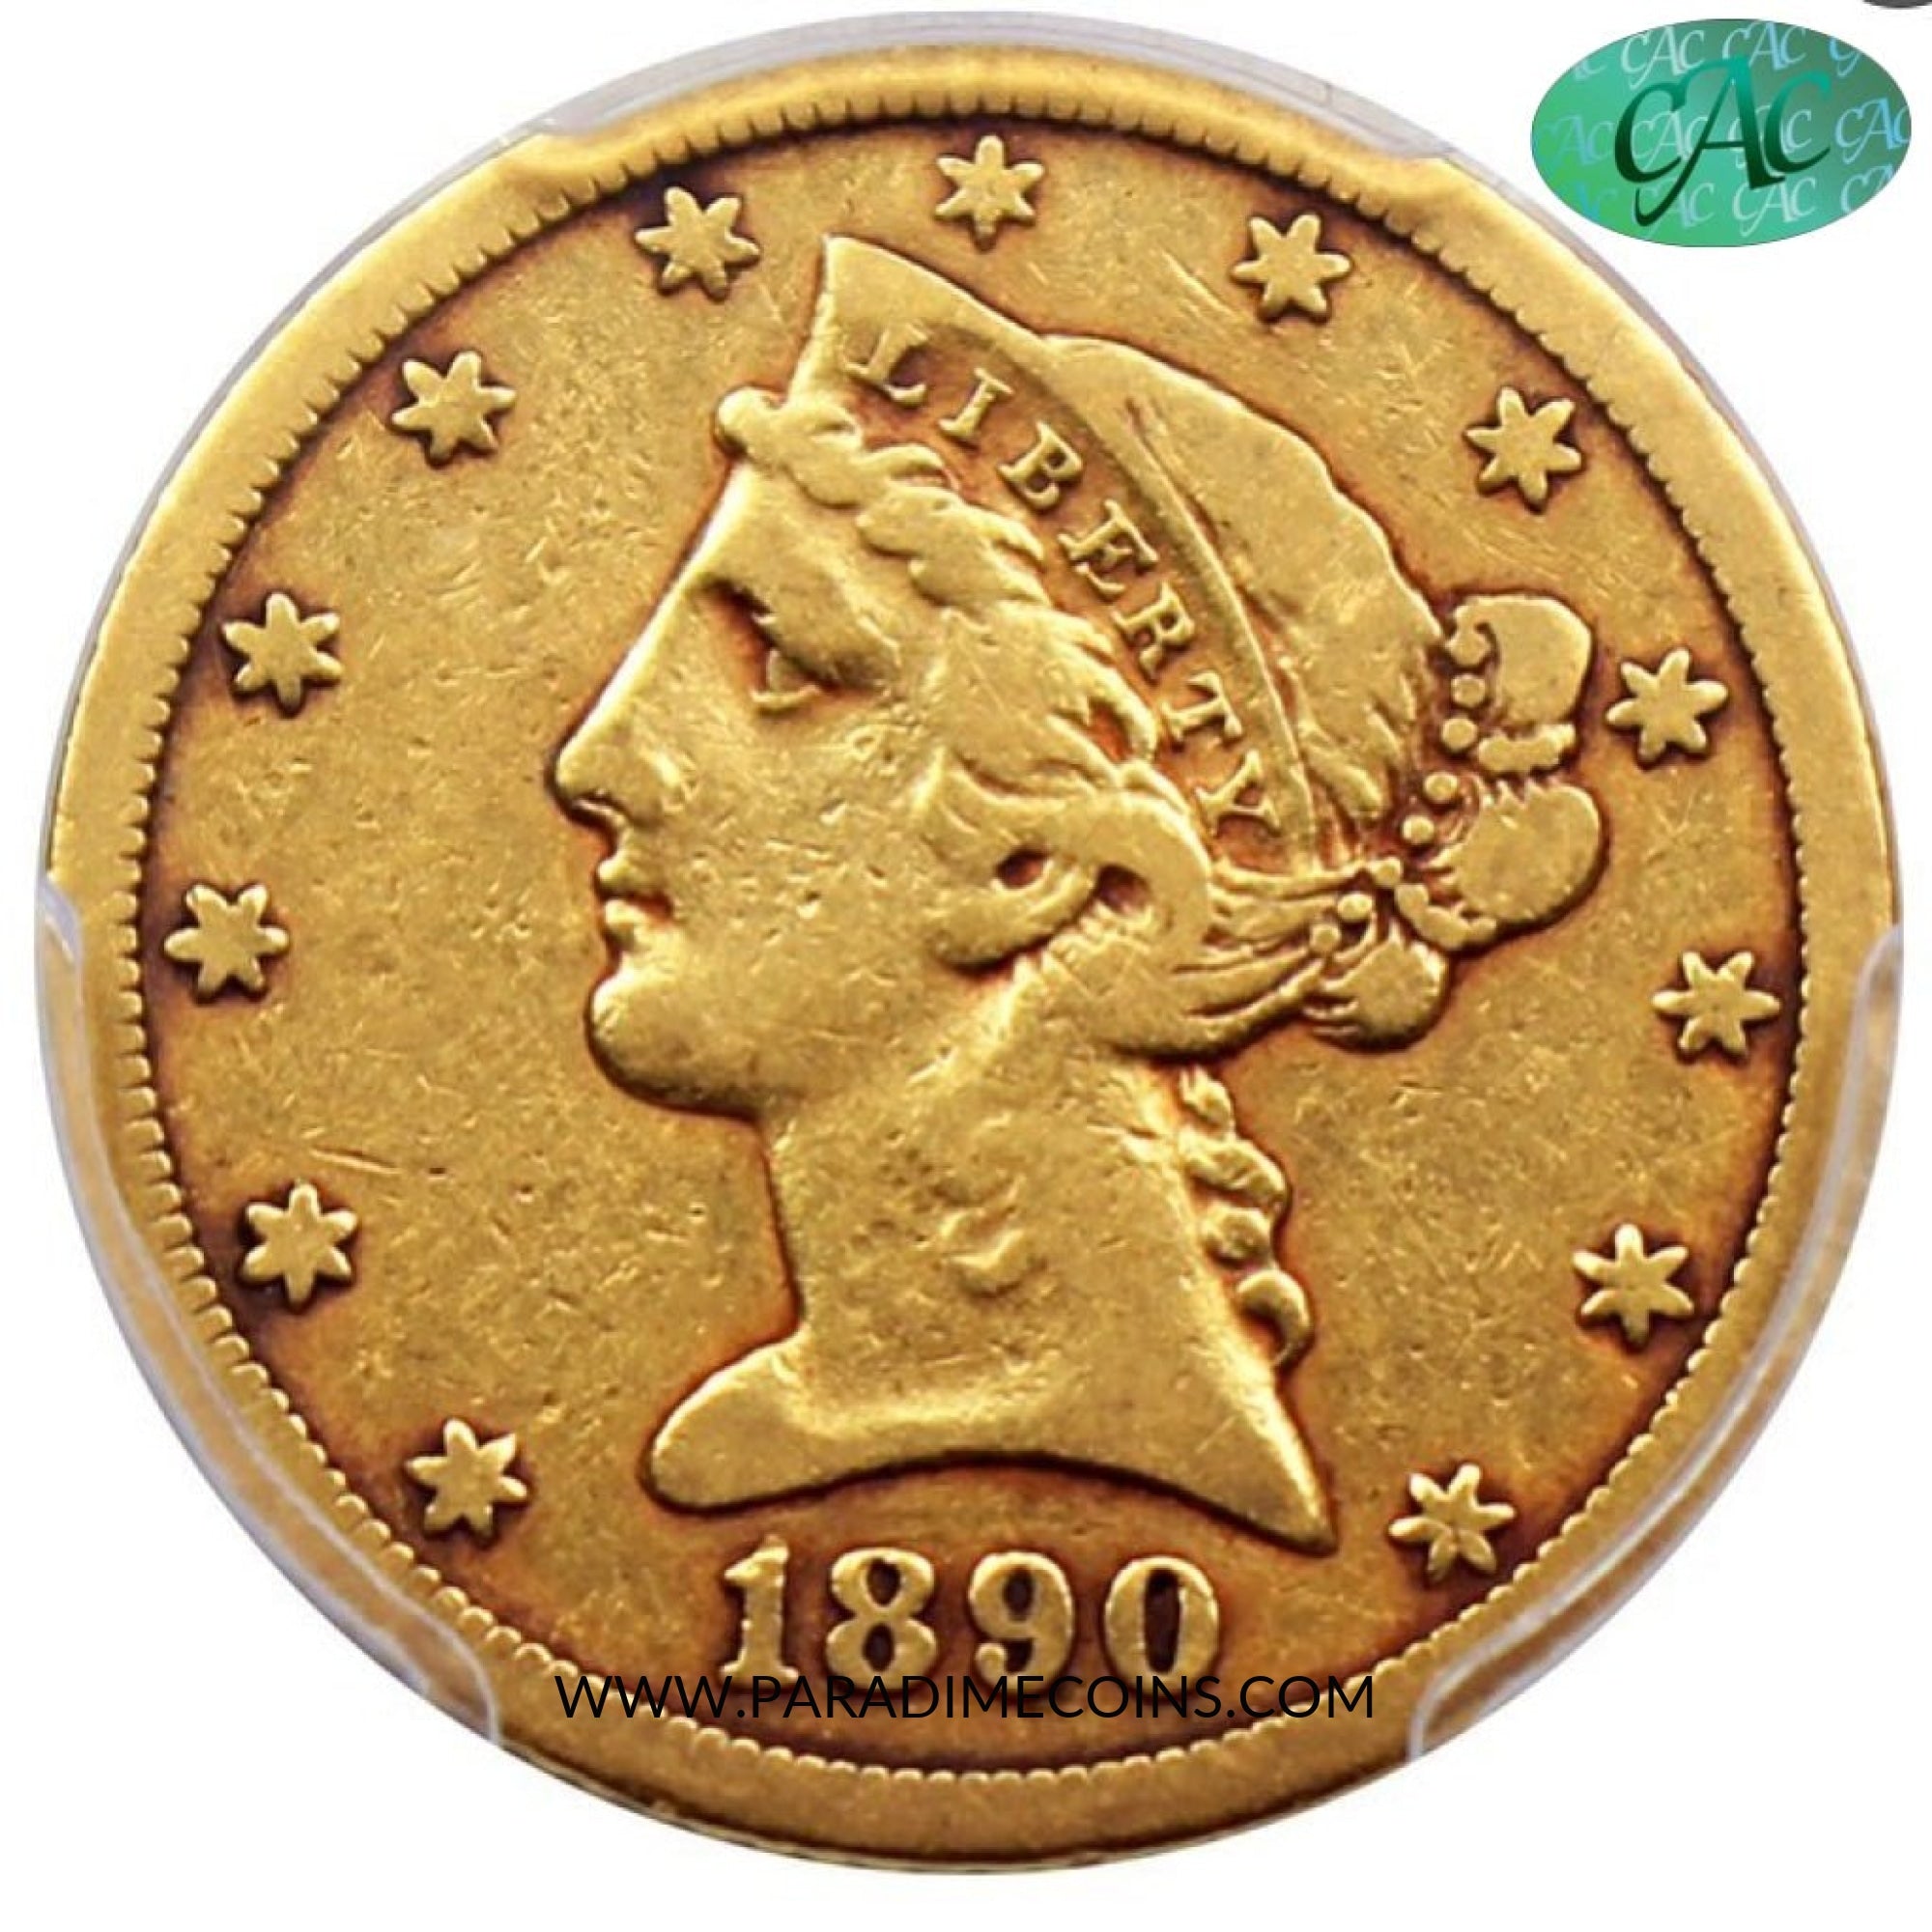 1890-CC $5 F15 PCGS CAC - Paradime Coins | PCGS NGC CACG CAC Rare US Numismatic Coins For Sale